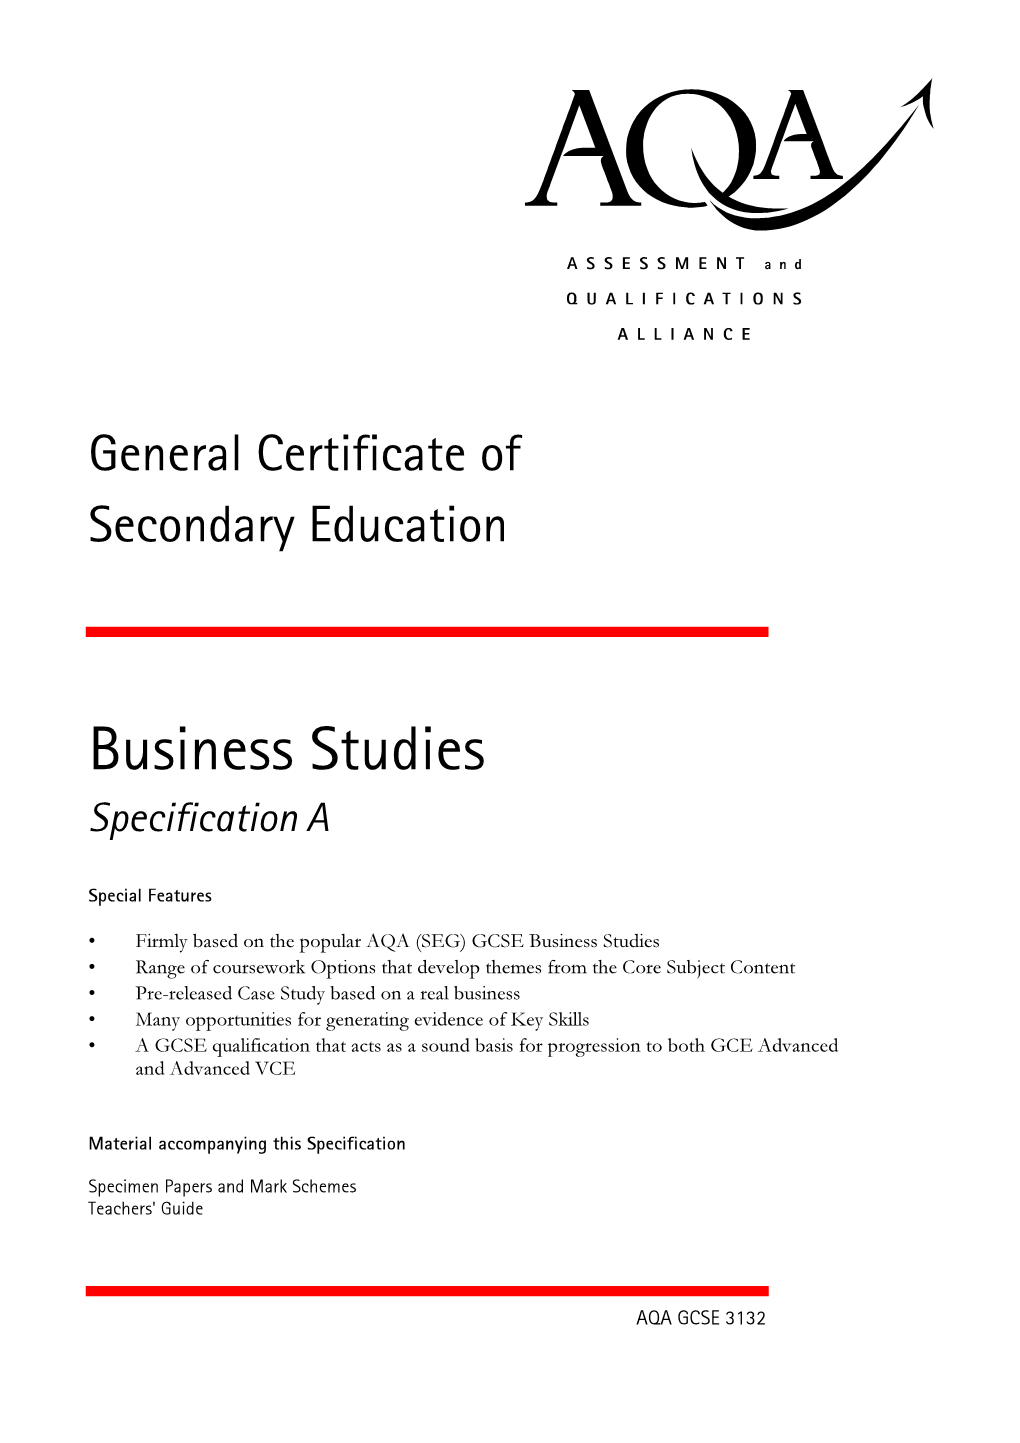 AQA GCSE Business Studies Specification A